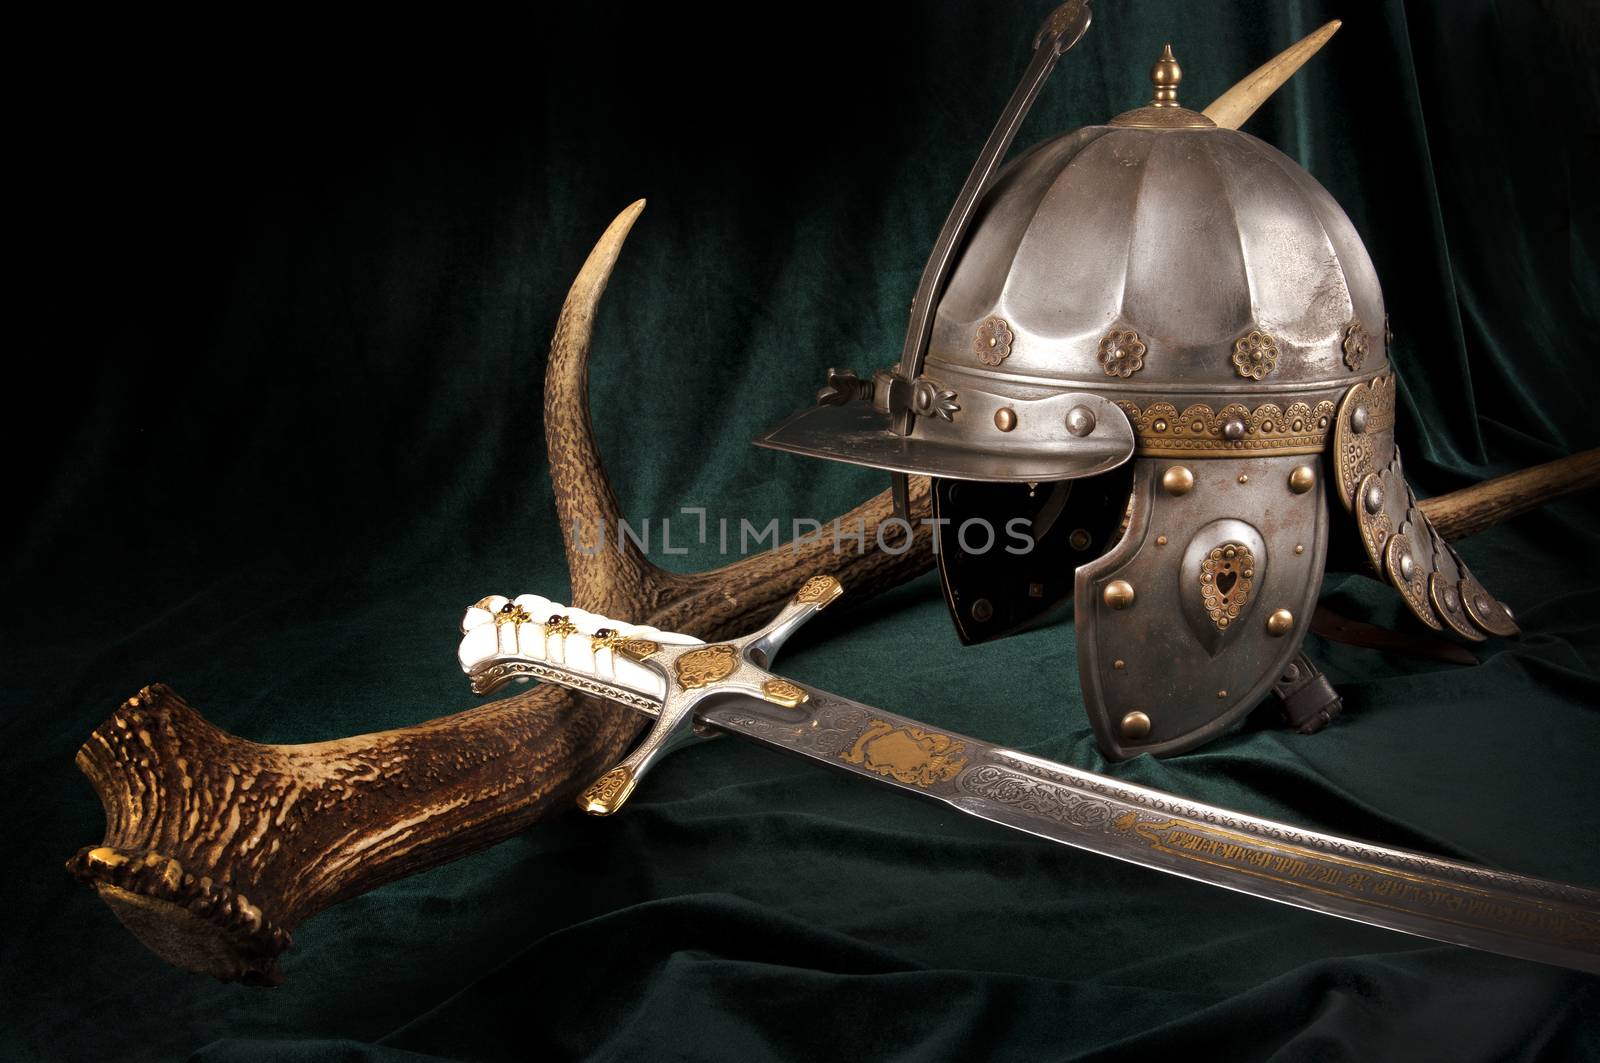 Iron helmet  by sibrikov